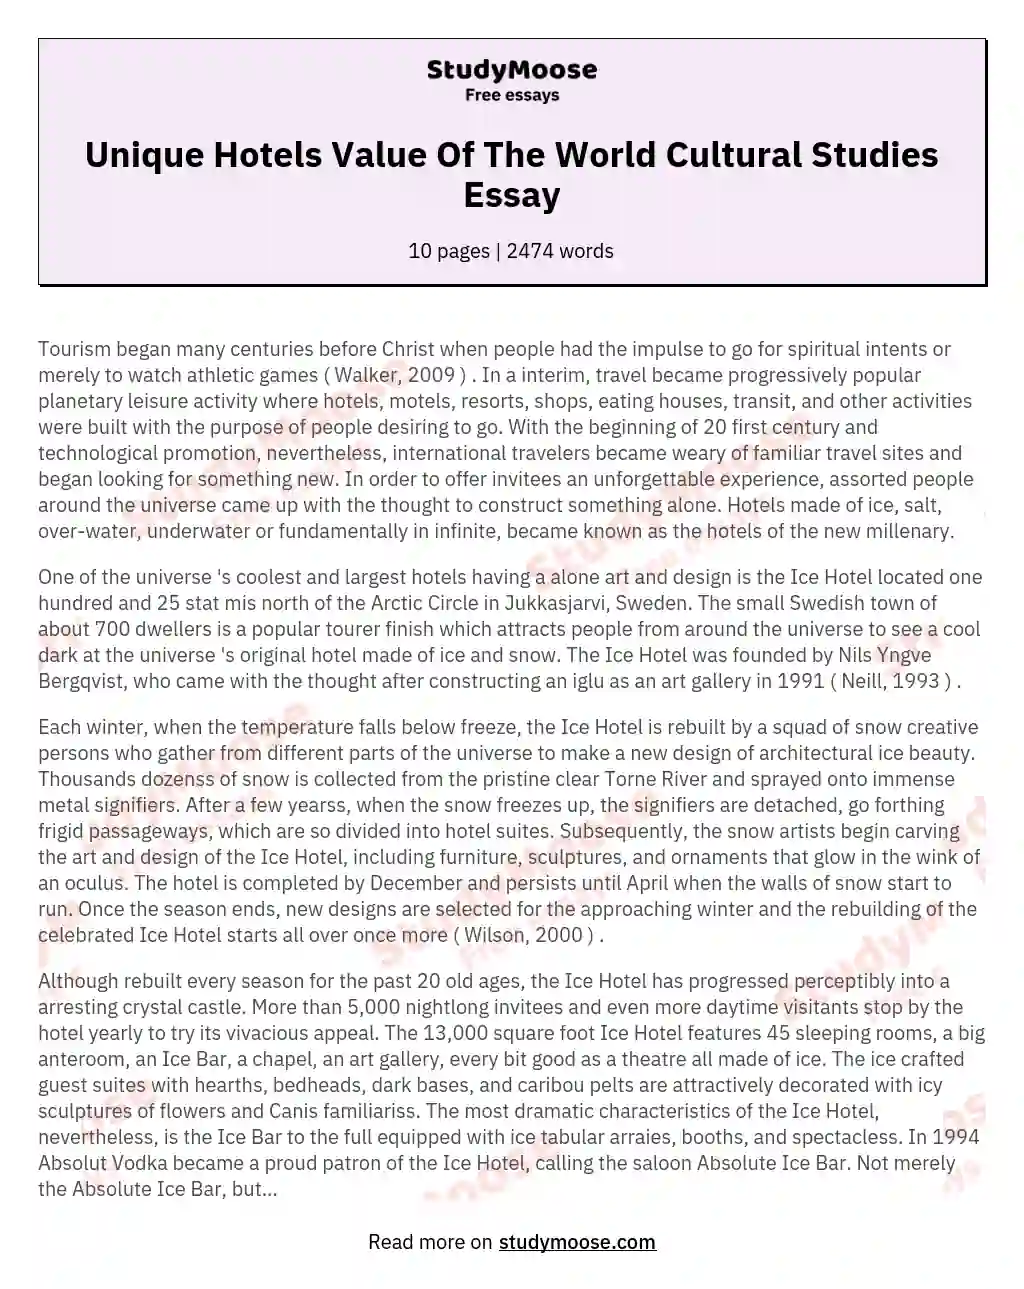 Unique Hotels Value Of The World Cultural Studies Essay essay